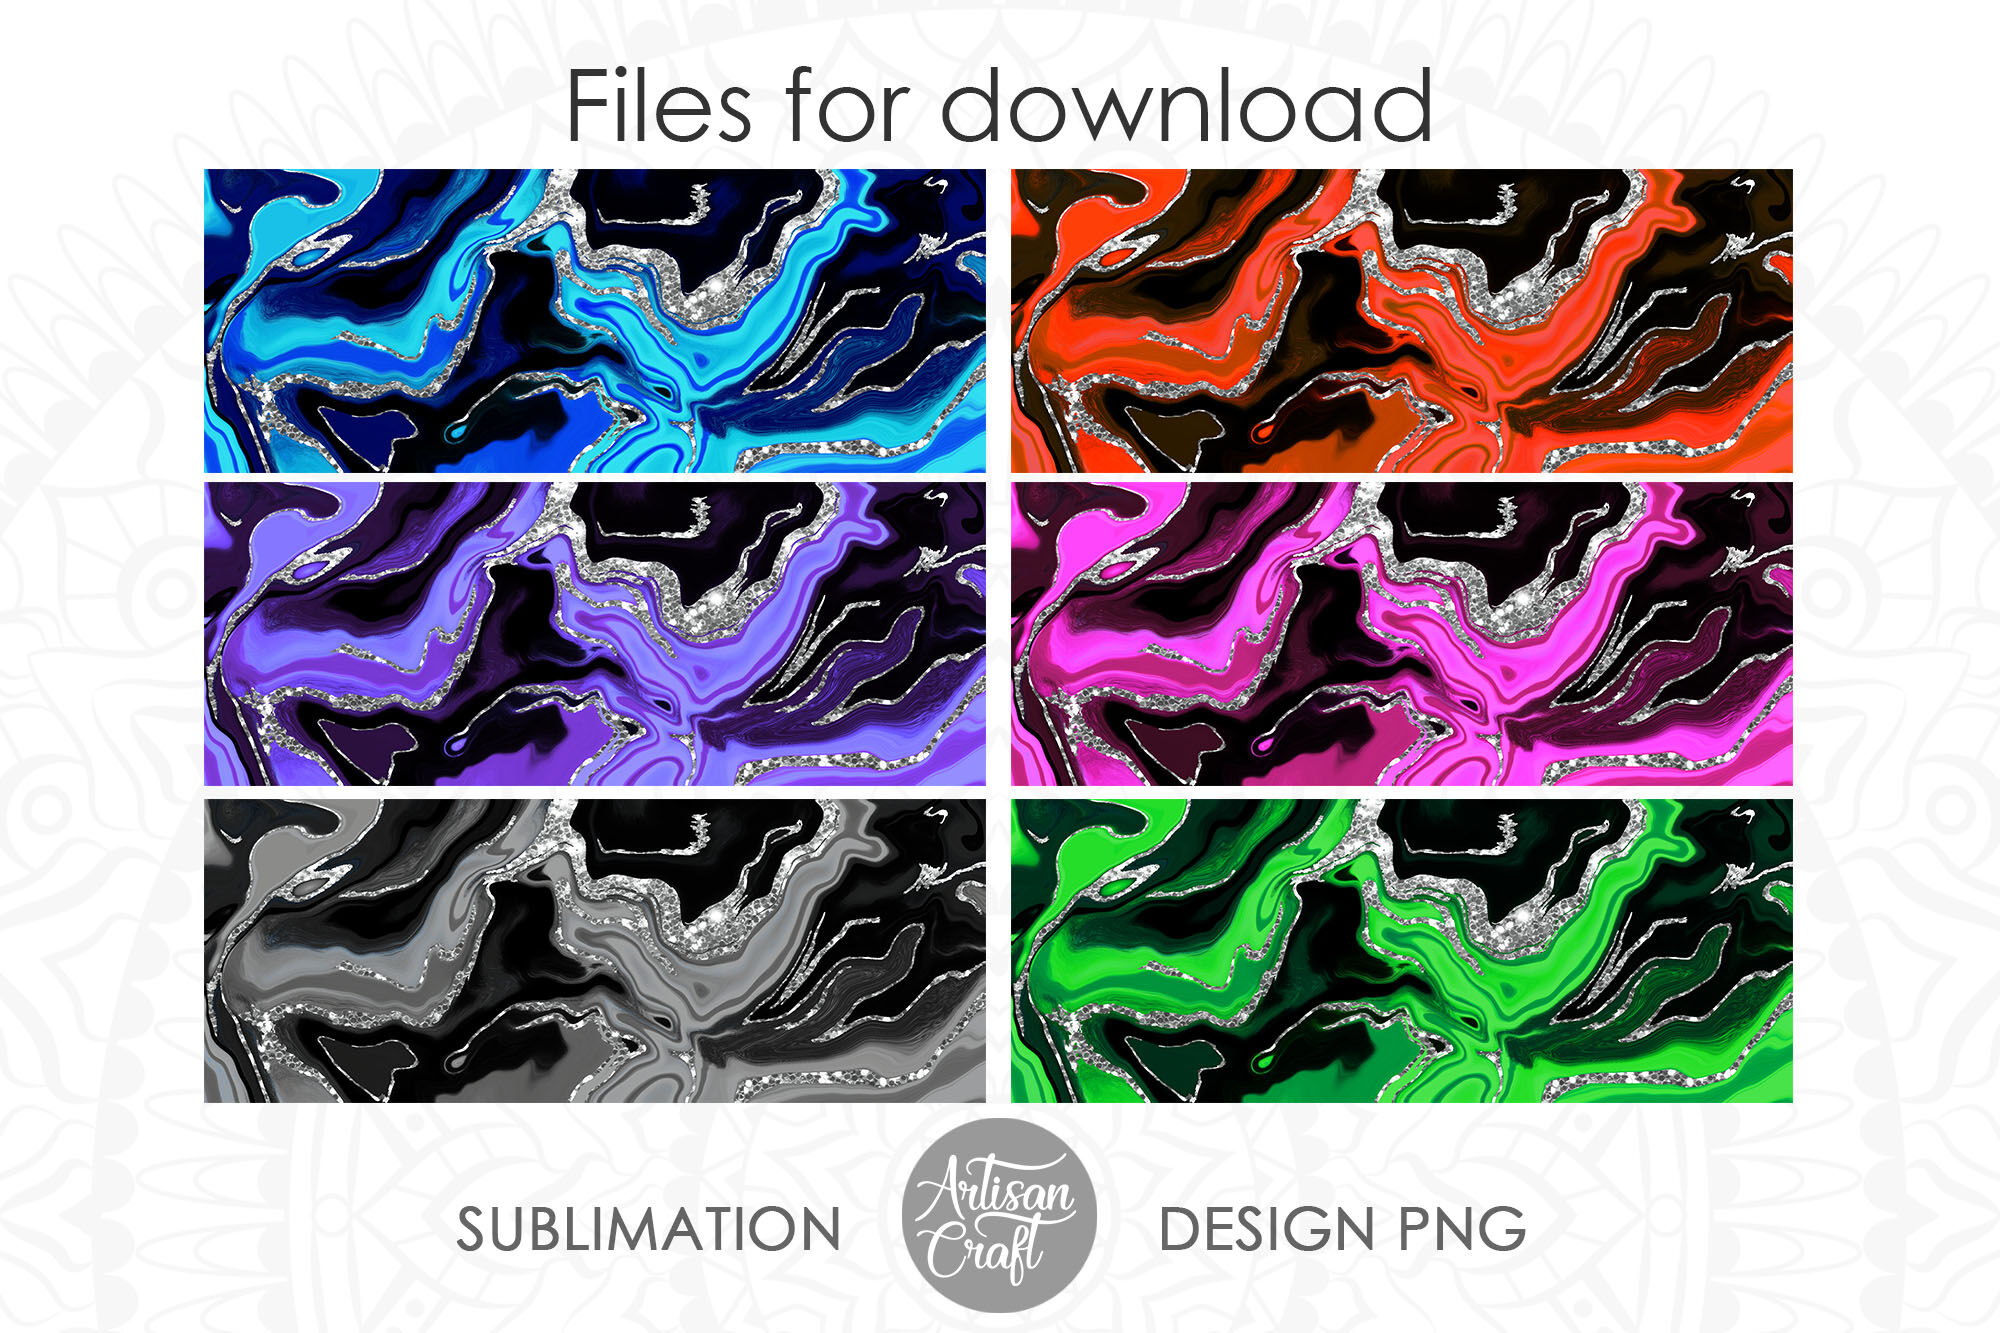 6 Sublimation Mug Template Png PNG File for Sublimation 